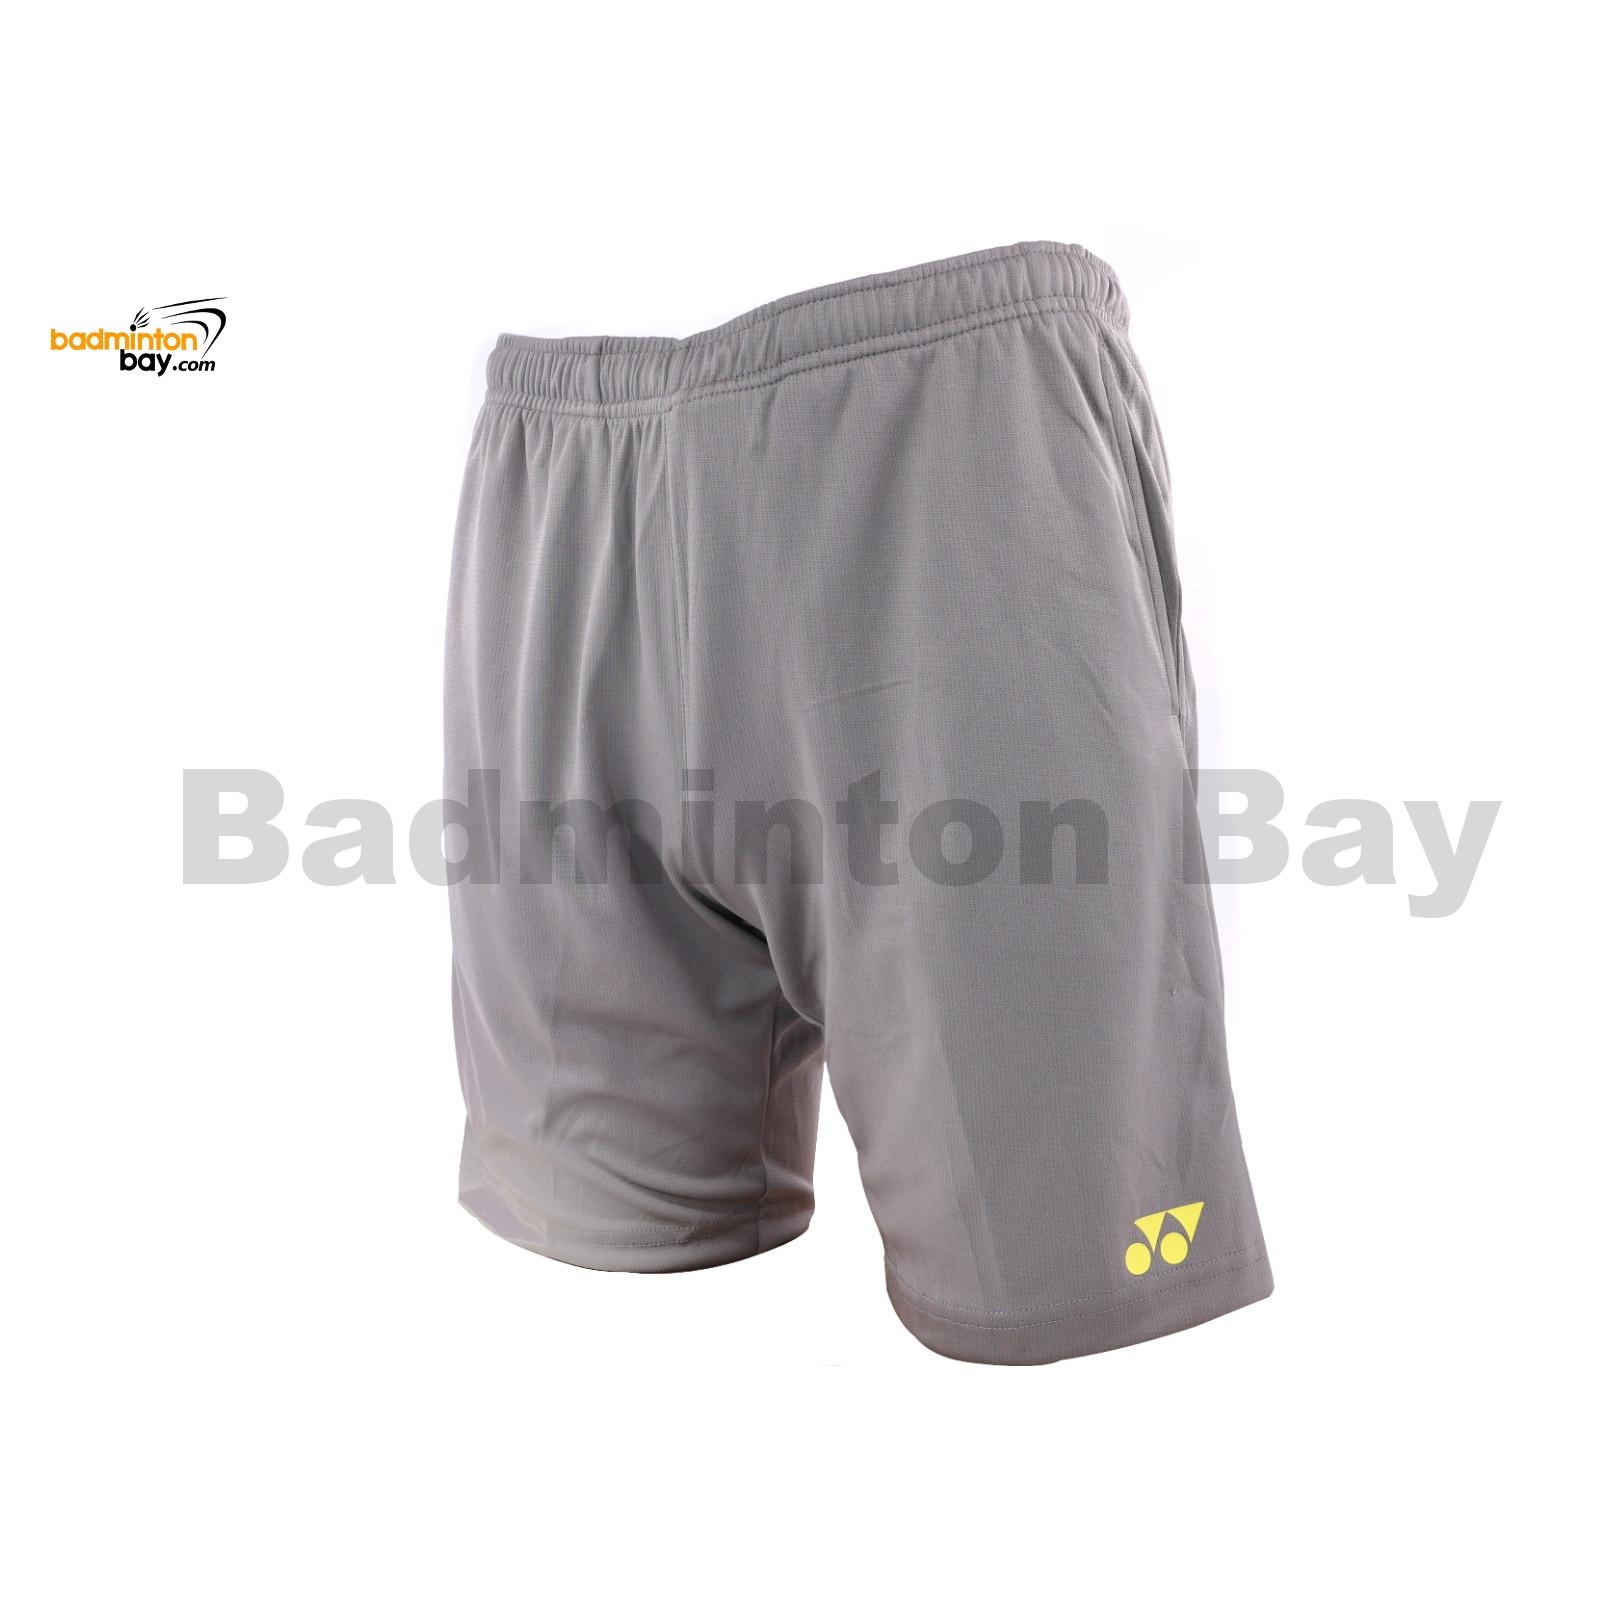 Details about   Yonex Men's Badminton Short Pants Sports Clothing Gray Racquet NWT 81PH003MCG 